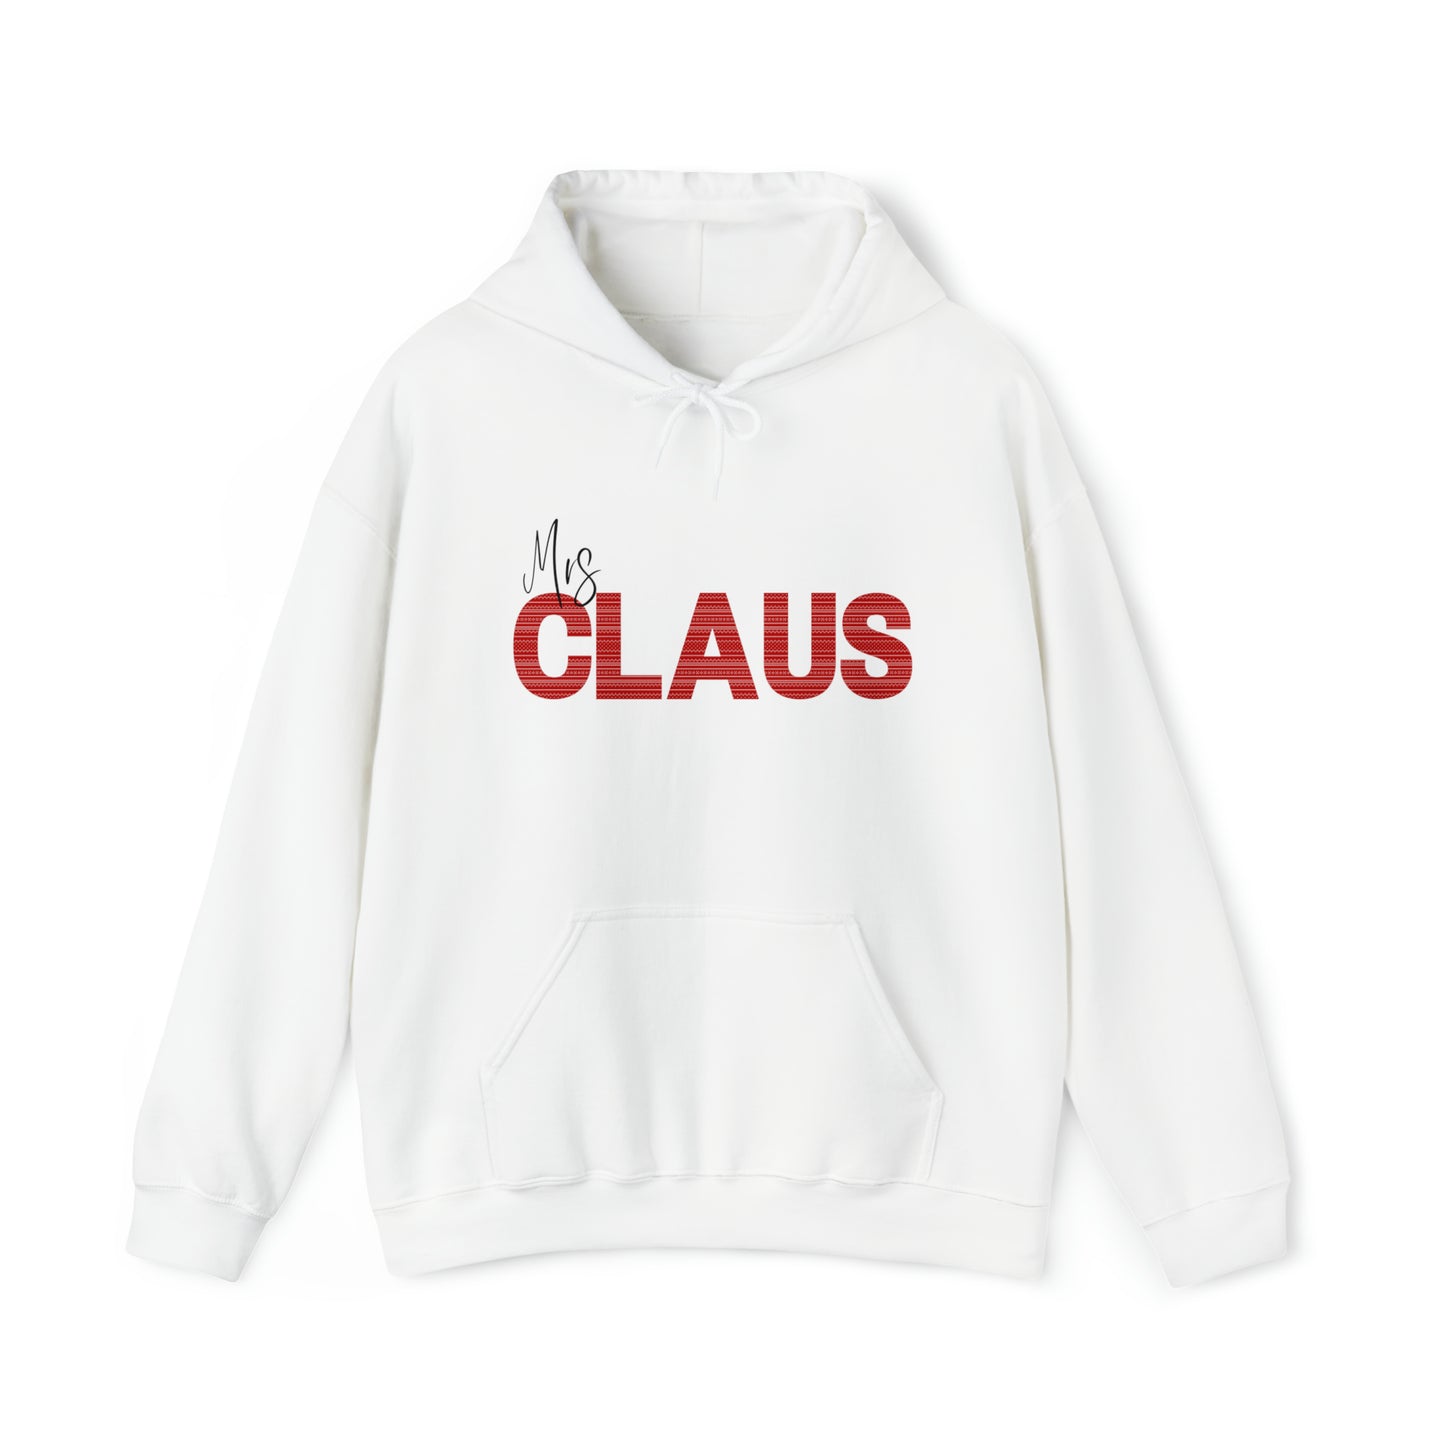 Mrs. Claus Christmas Hooded Sweatshirt